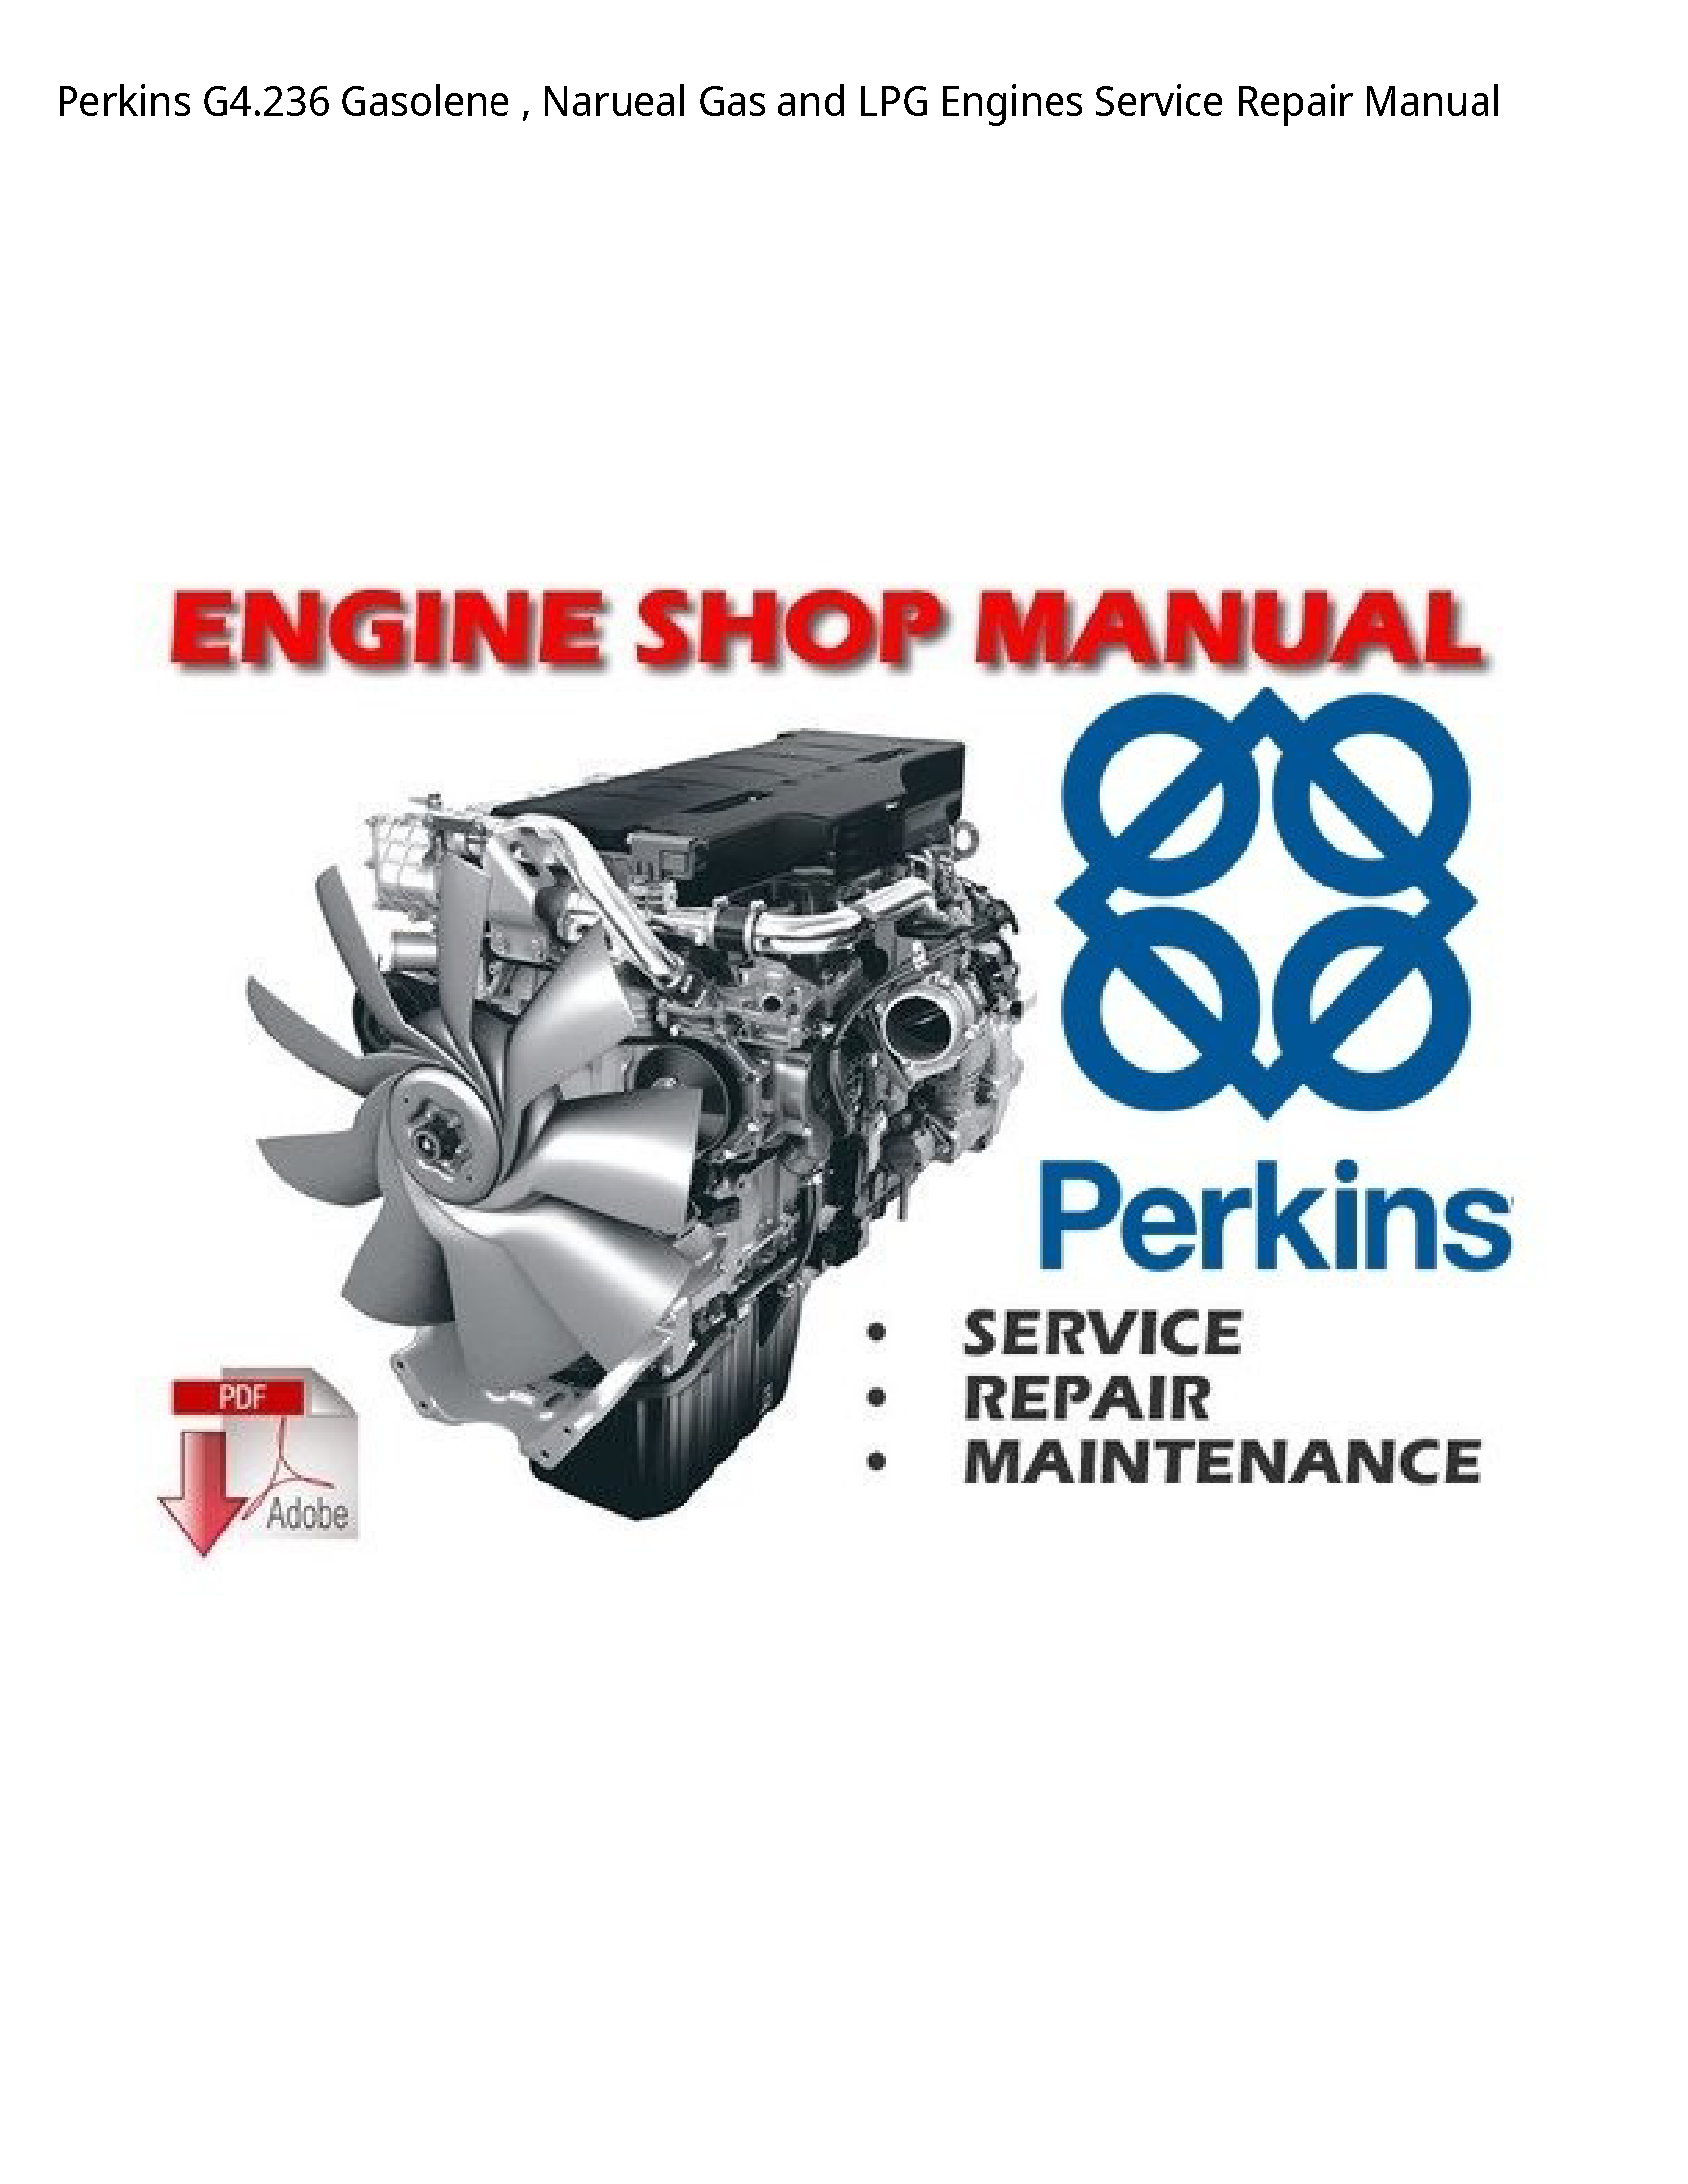 Perkins G4.236 Gasolene Narueal Gas  LPG Engines manual